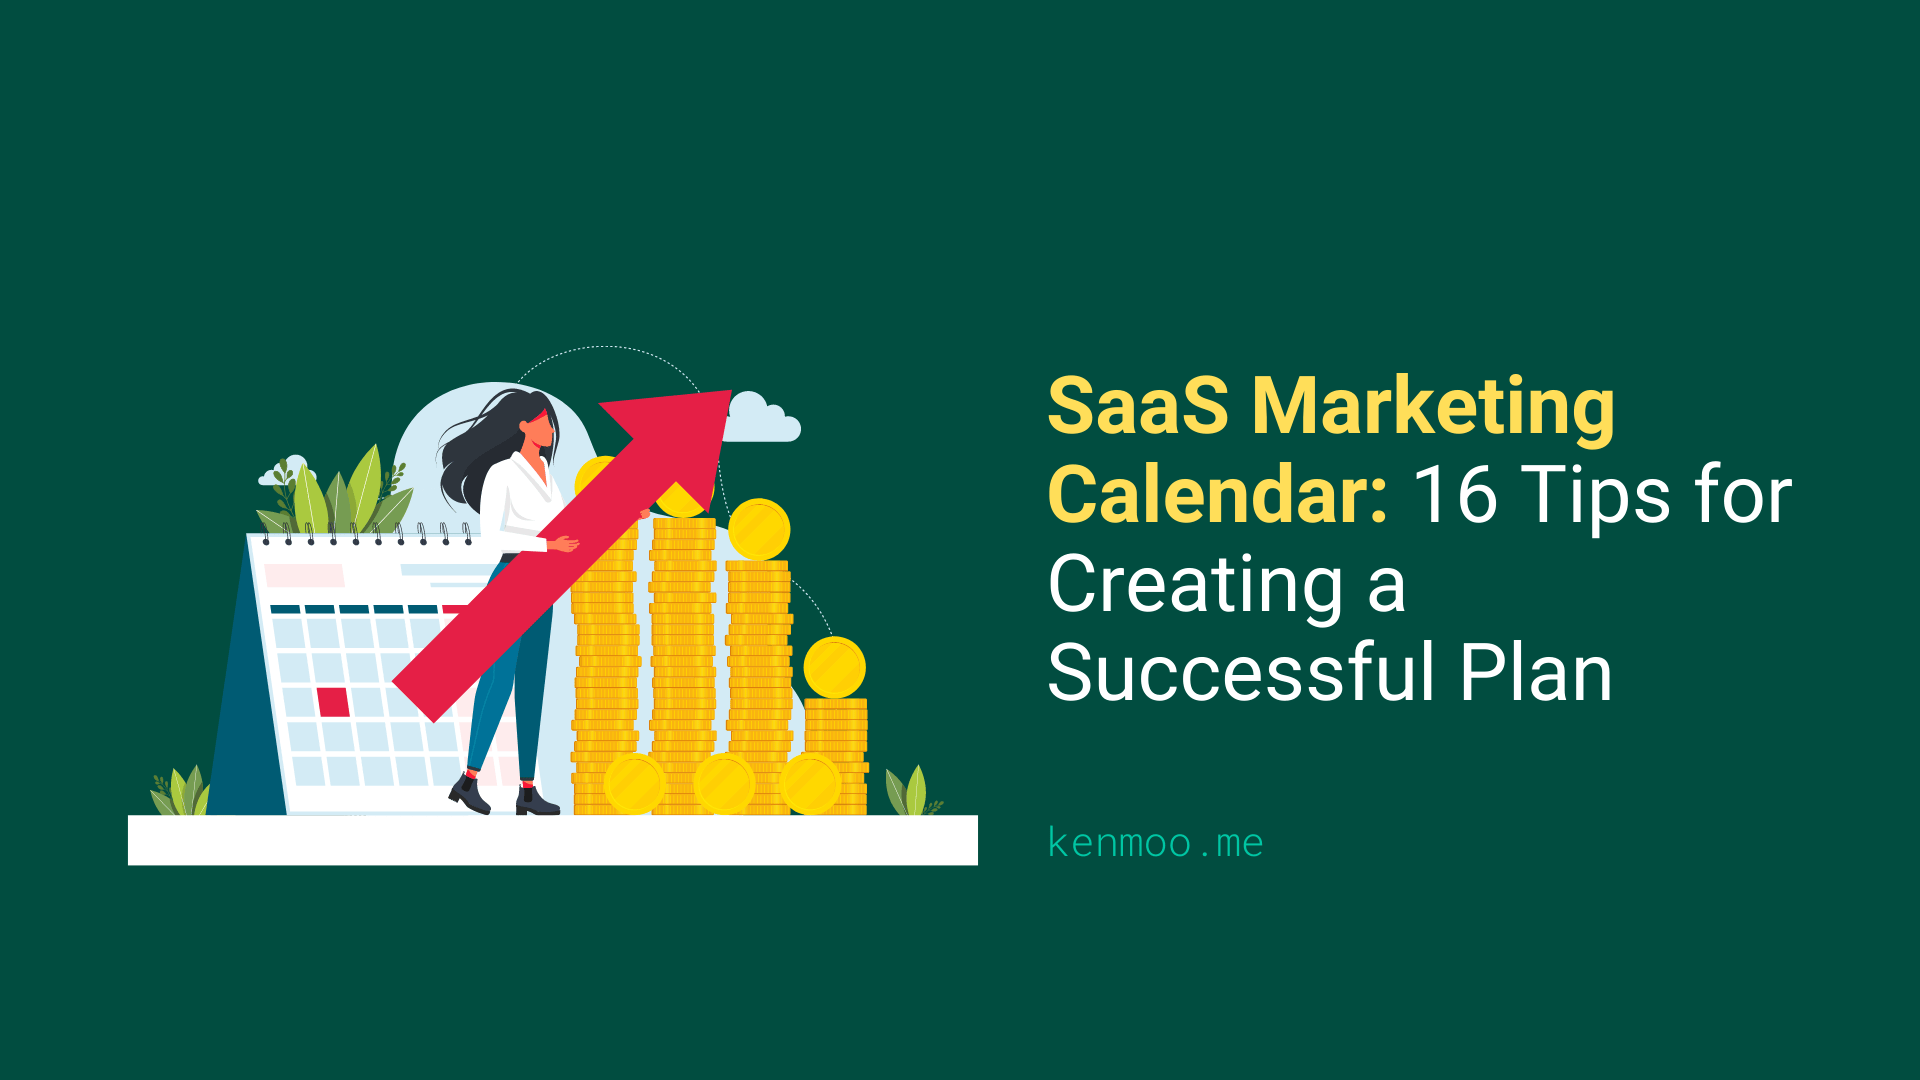 SaaS Marketing Calendar: 16 Tips for Creating a Successful Plan